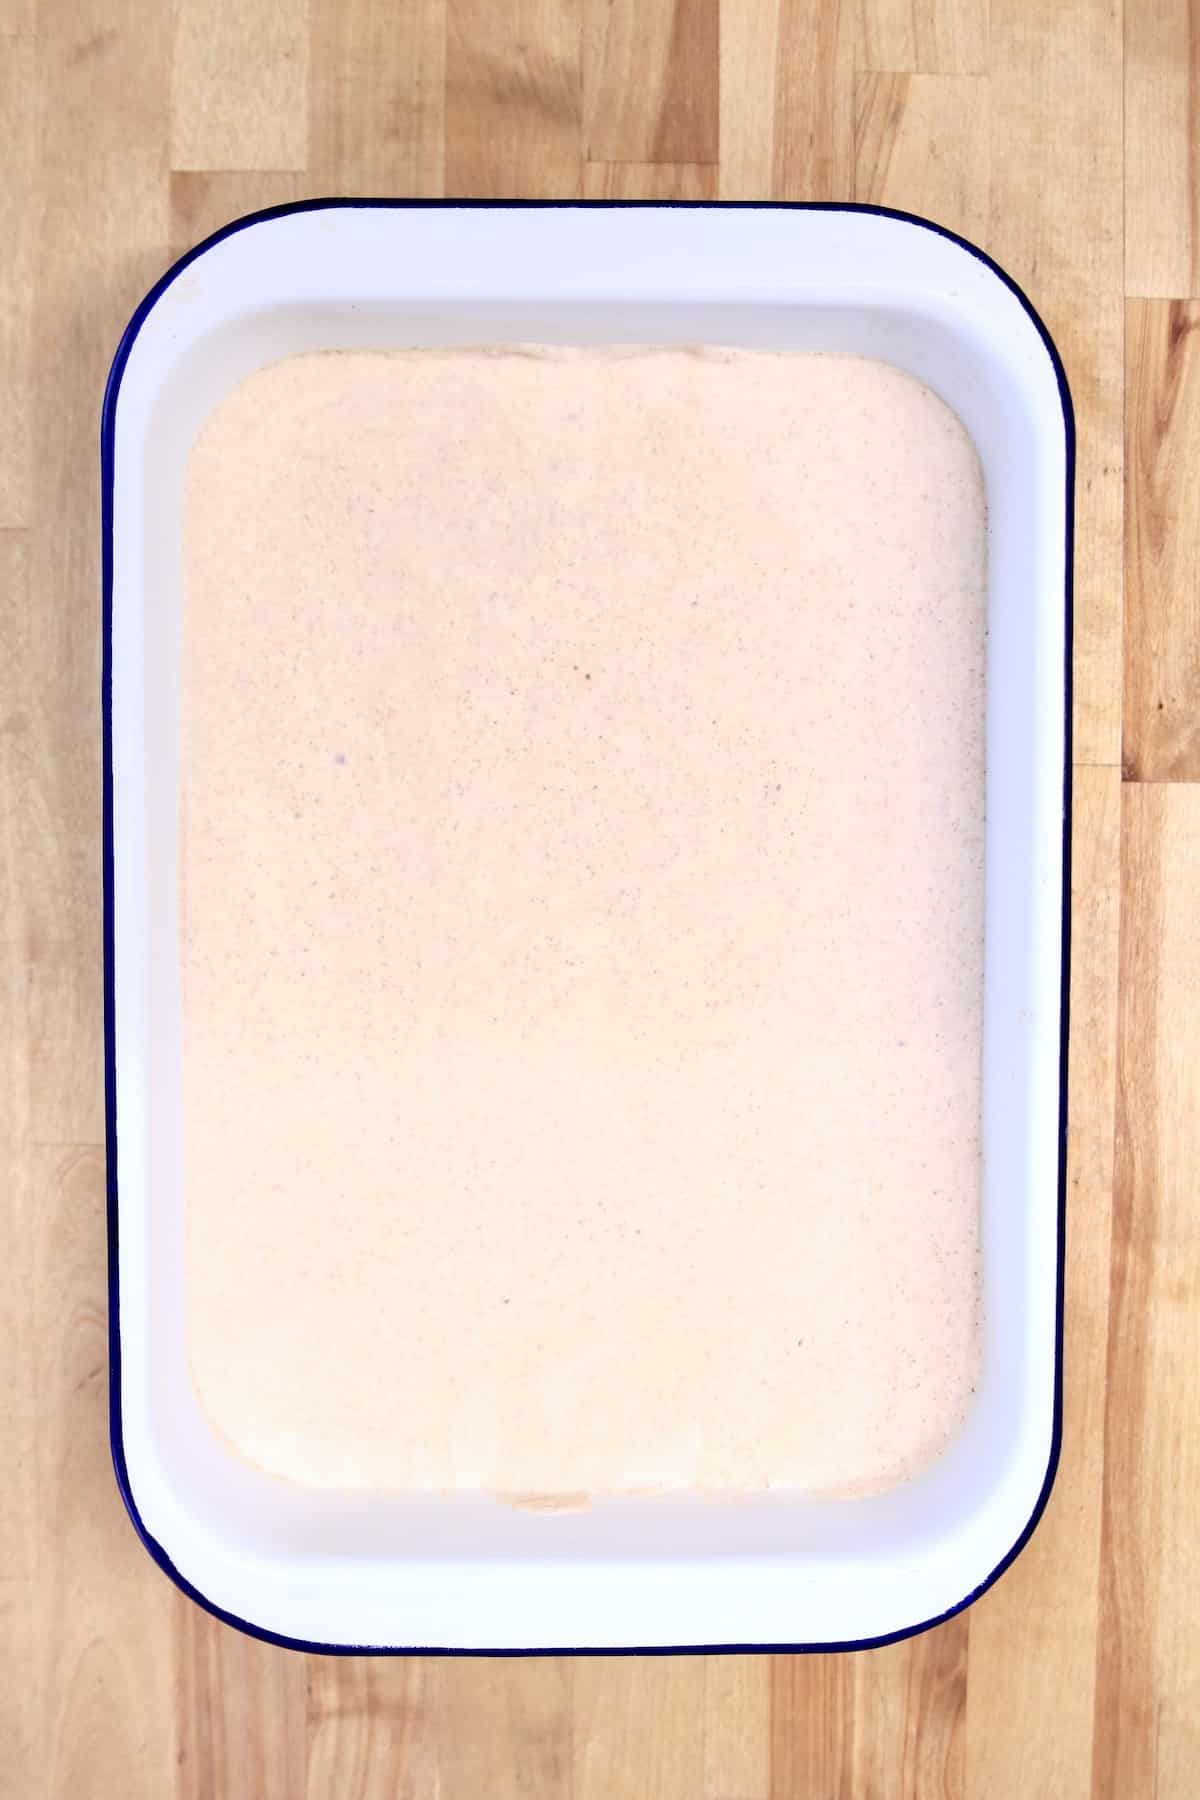 Pan of frozen Cinnamon Ice Cream.